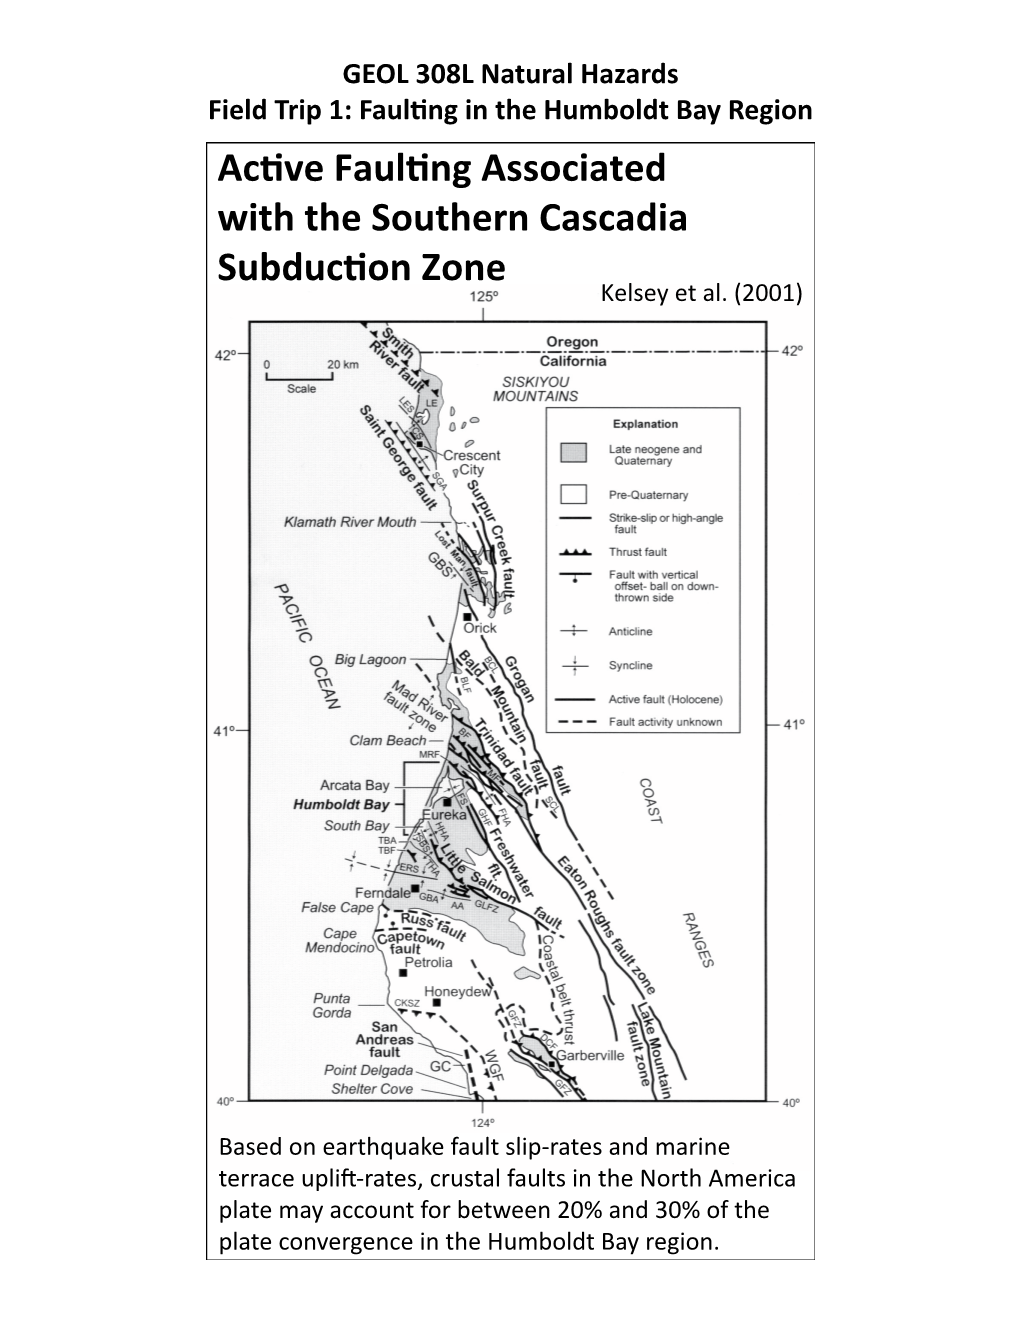 Acɵve Faulɵng Associated with the Southern Cascadia Subducɵon Zone Kelsey Et Al